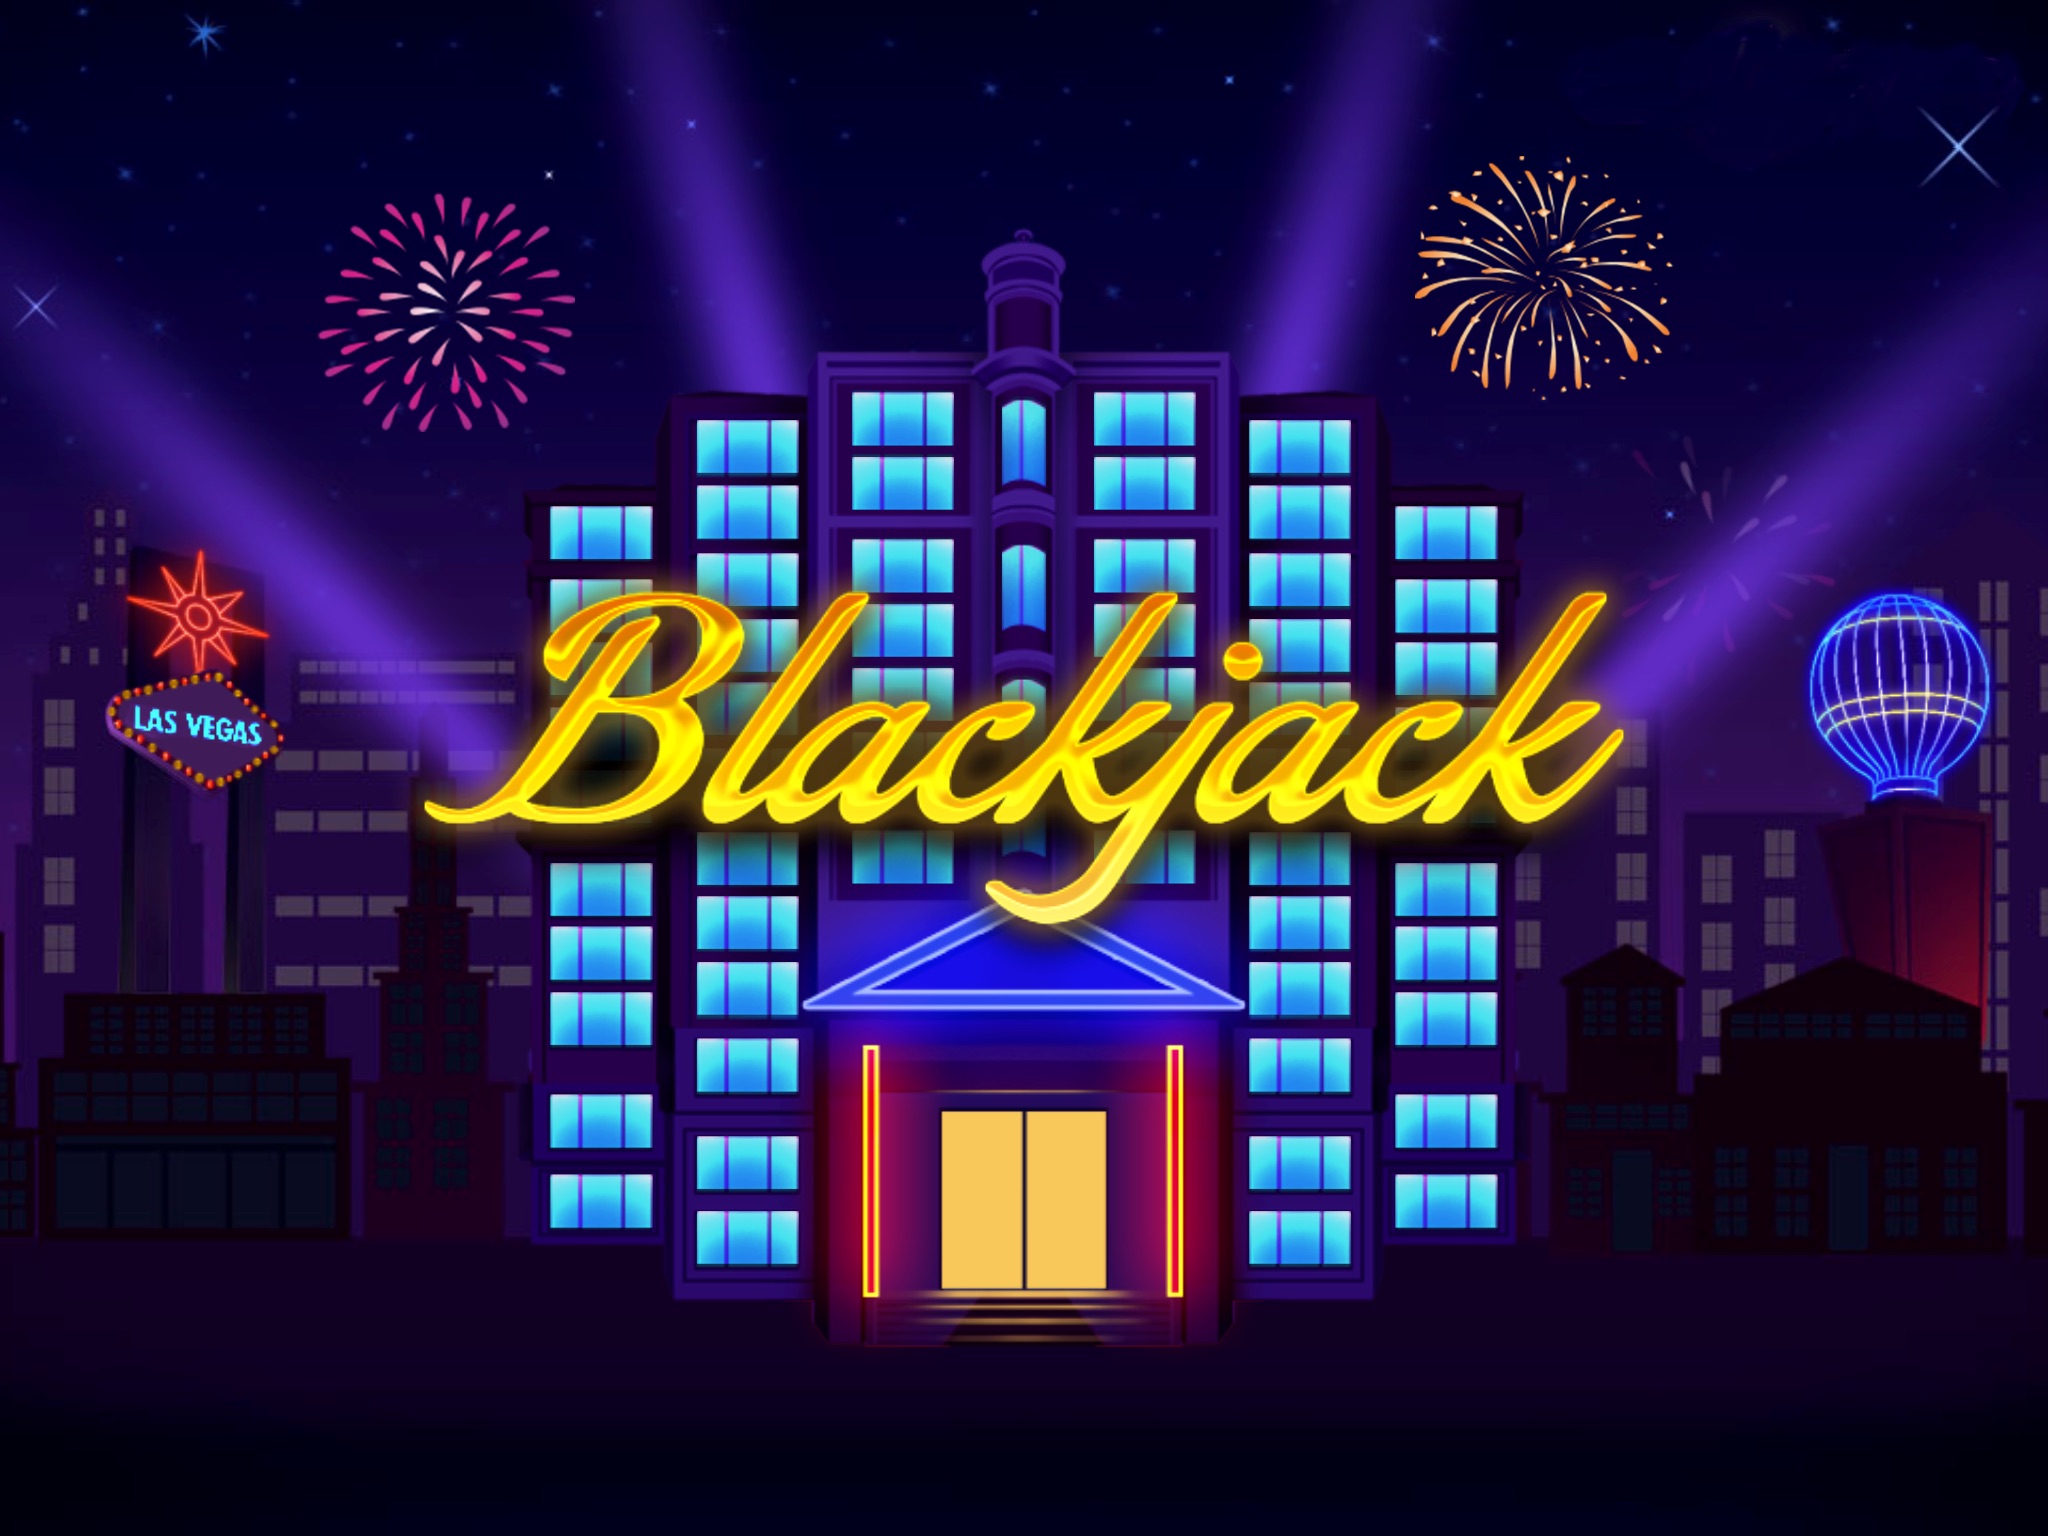 Blackjack-black jack 21 casino screenshot 2